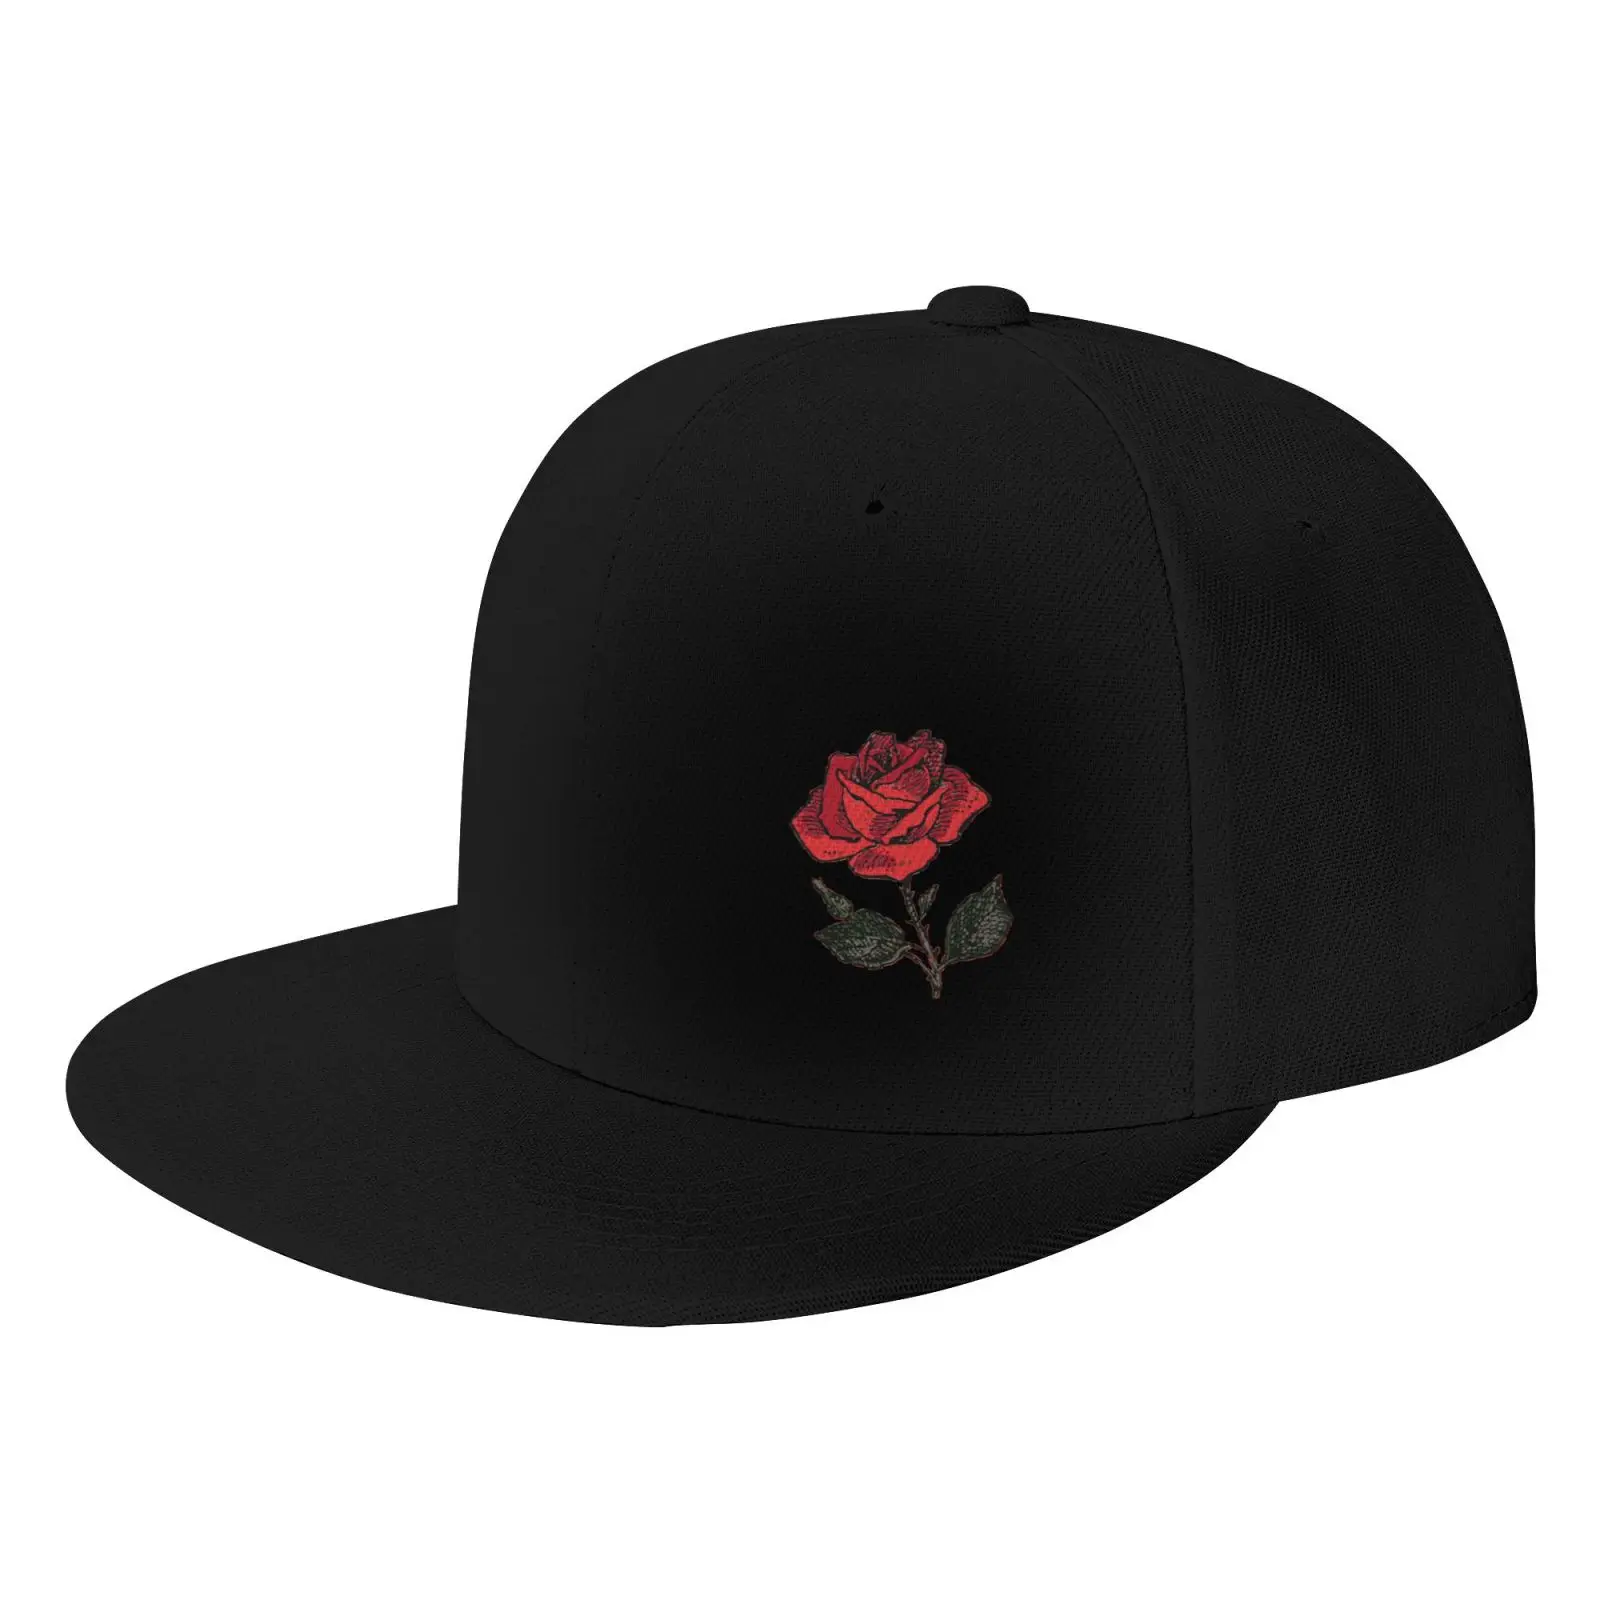 New Fashion baseball cap Men Women Cool Hip Hop Caps Adjustable Flat Bill Trucker Dad Gift